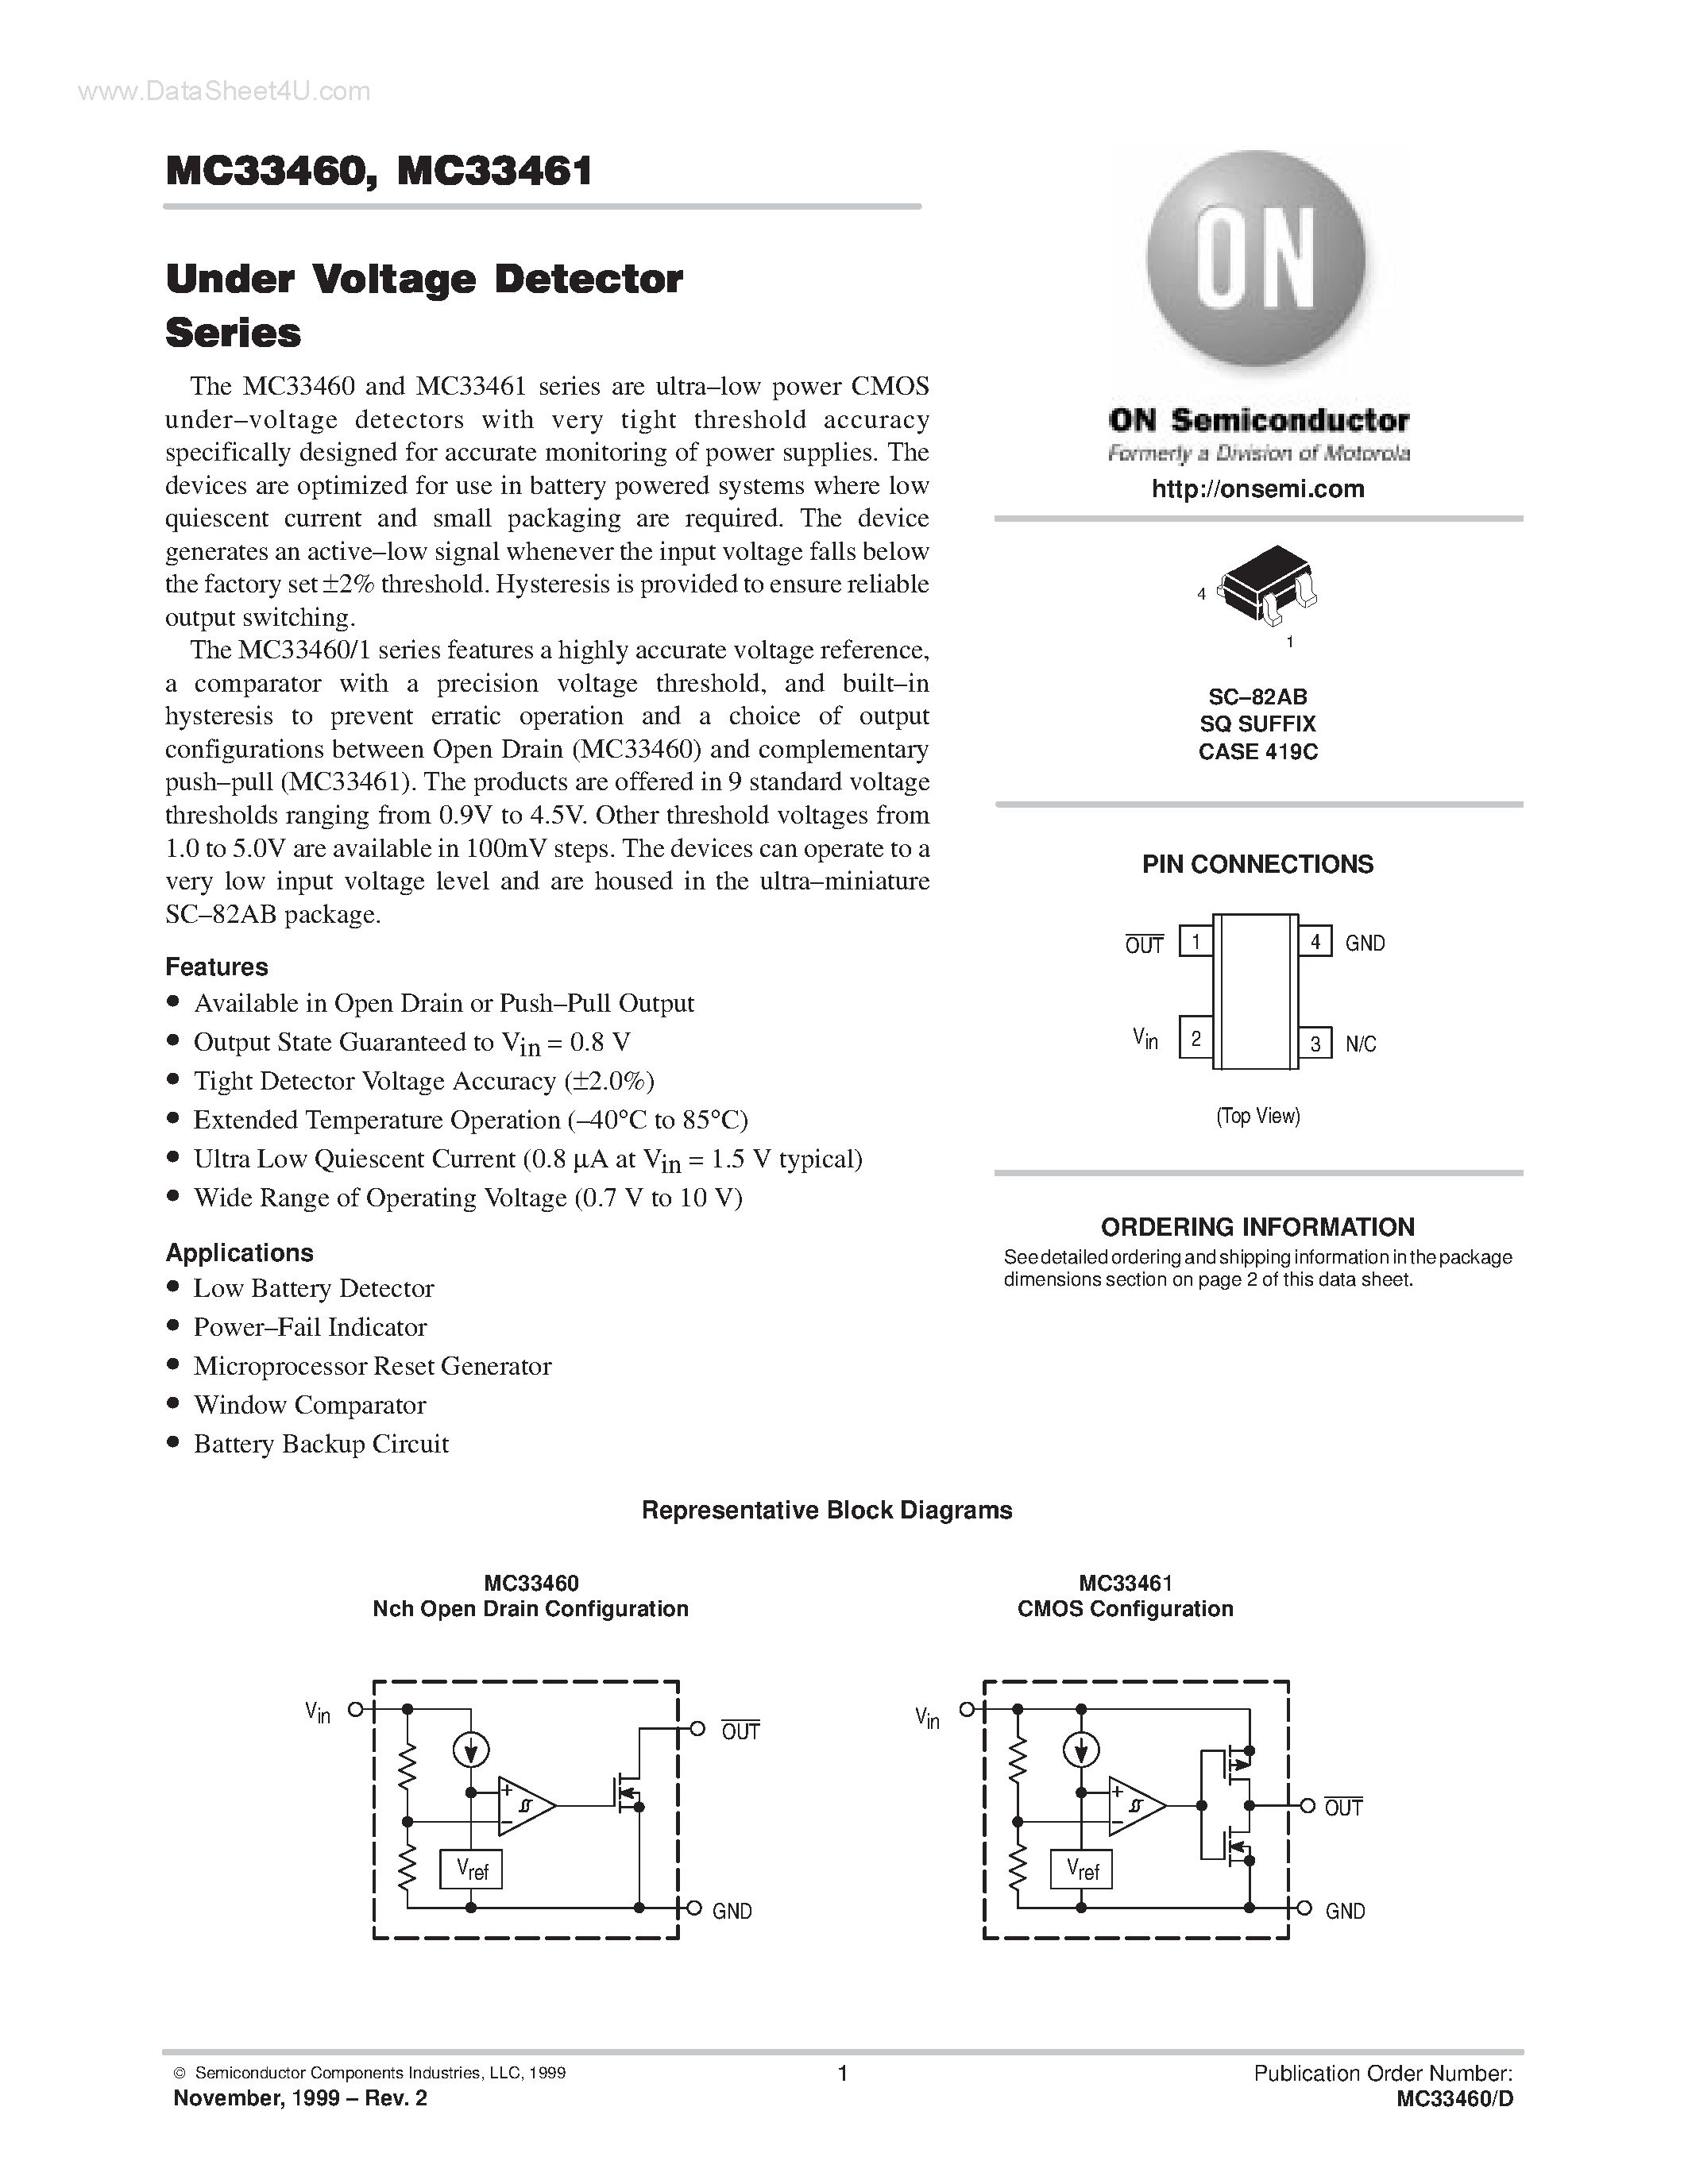 Datasheet MC33460 - (MC33460 / MC33461) Under Voltage Detector Series page 1